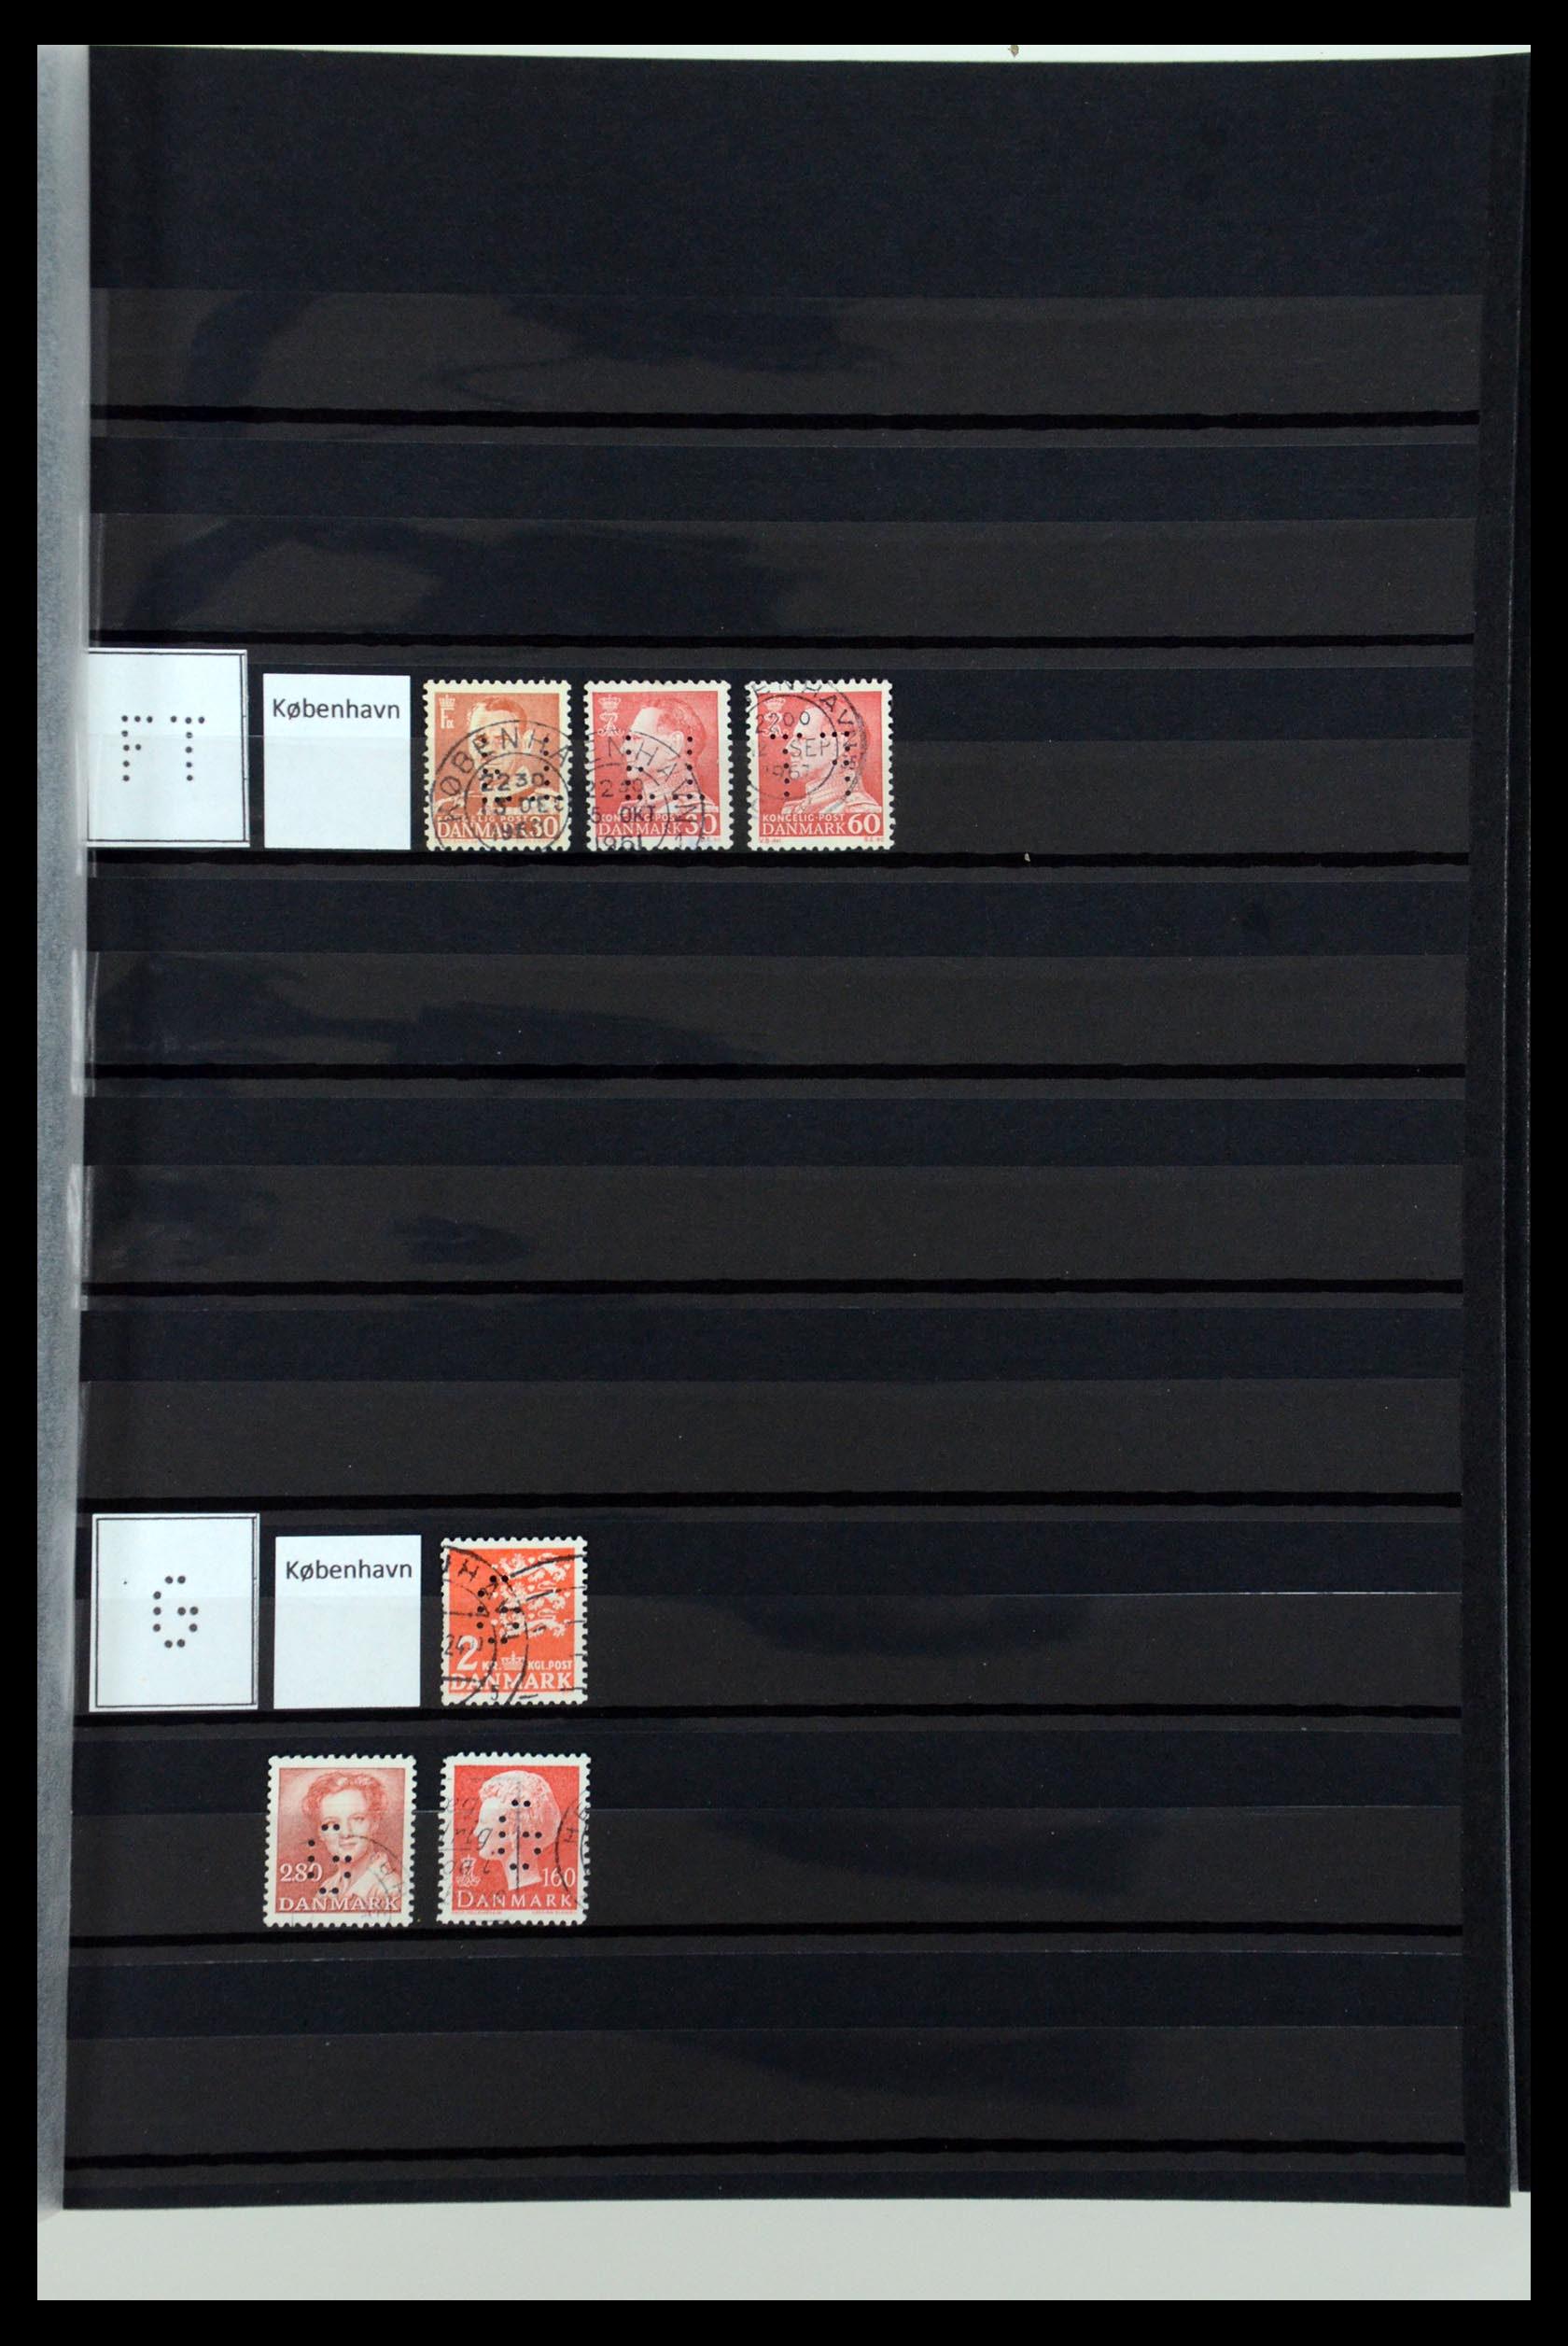 36396 077 - Stamp collection 36396 Denmark perfins.